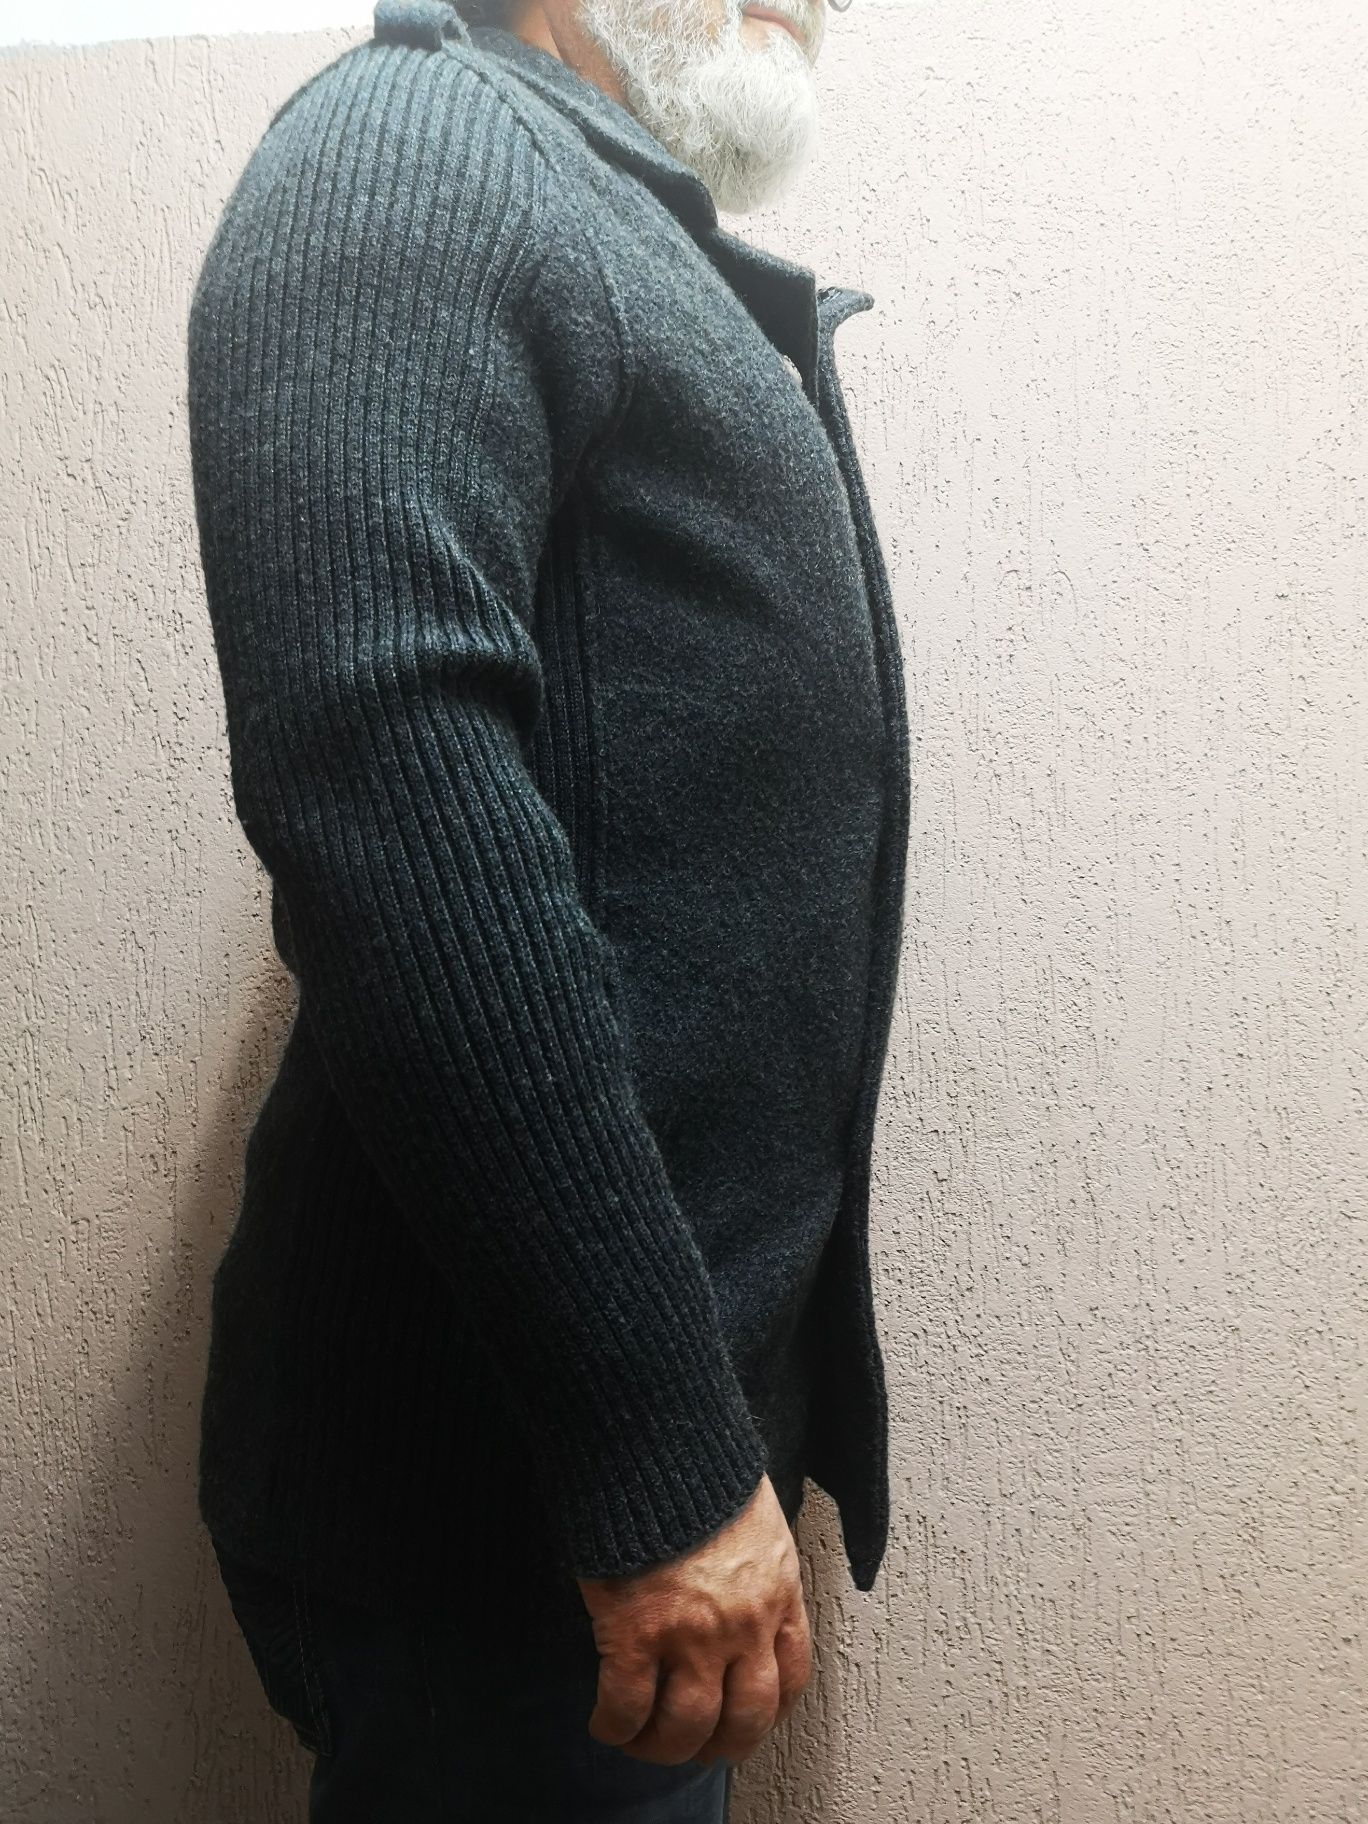 Pardesiu tricotat Zara tip militar la doua randuri masura L